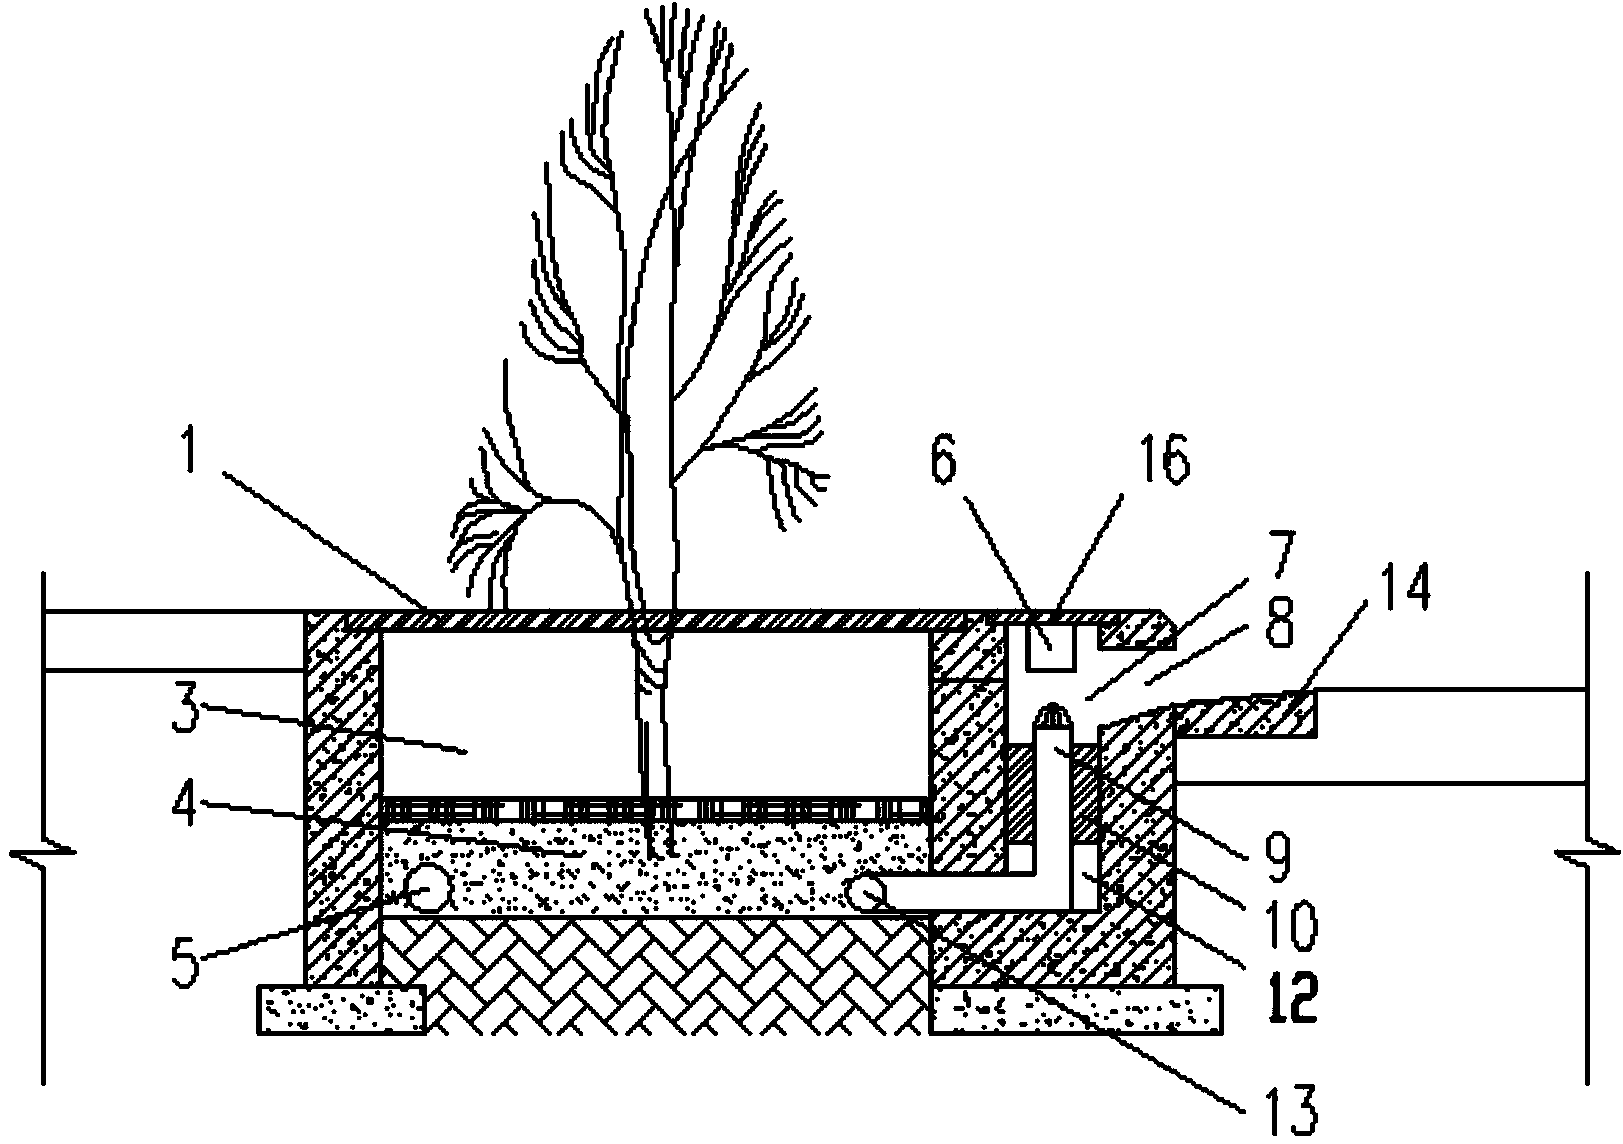 Tree pool and method for filtering runoff rainwater through tree pool